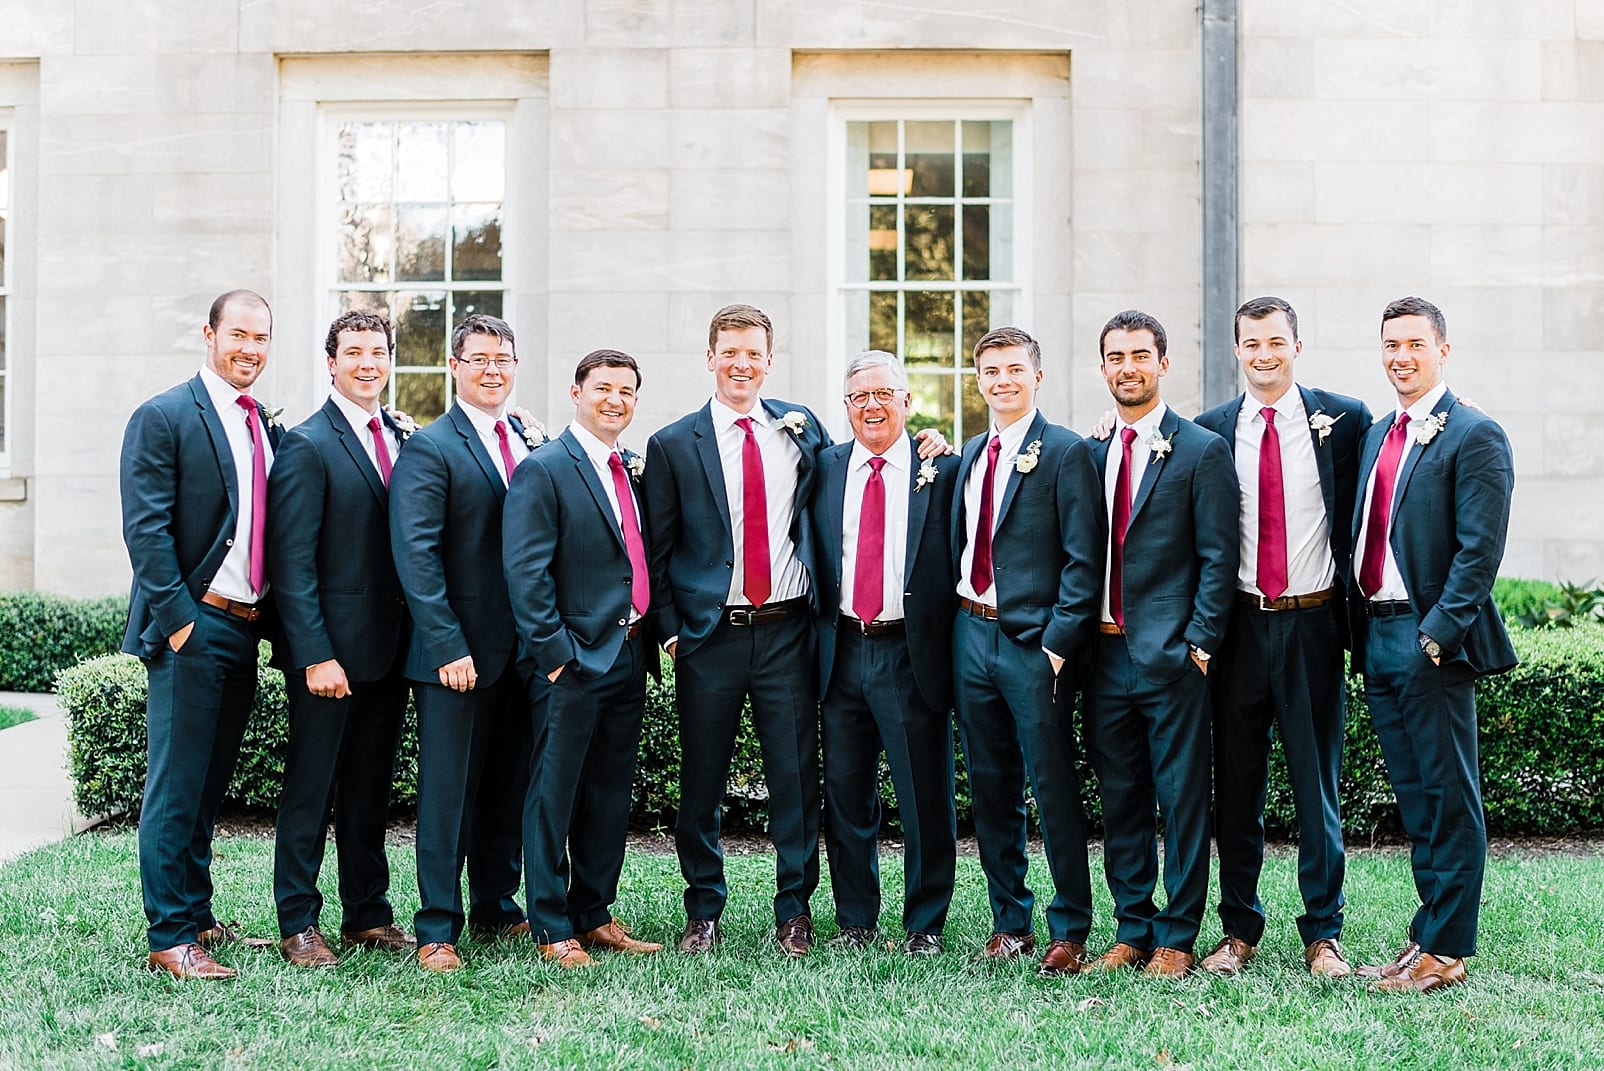 north carolina wedding photographer groomsmen portraits burgundy ties capitol building raleigh photo